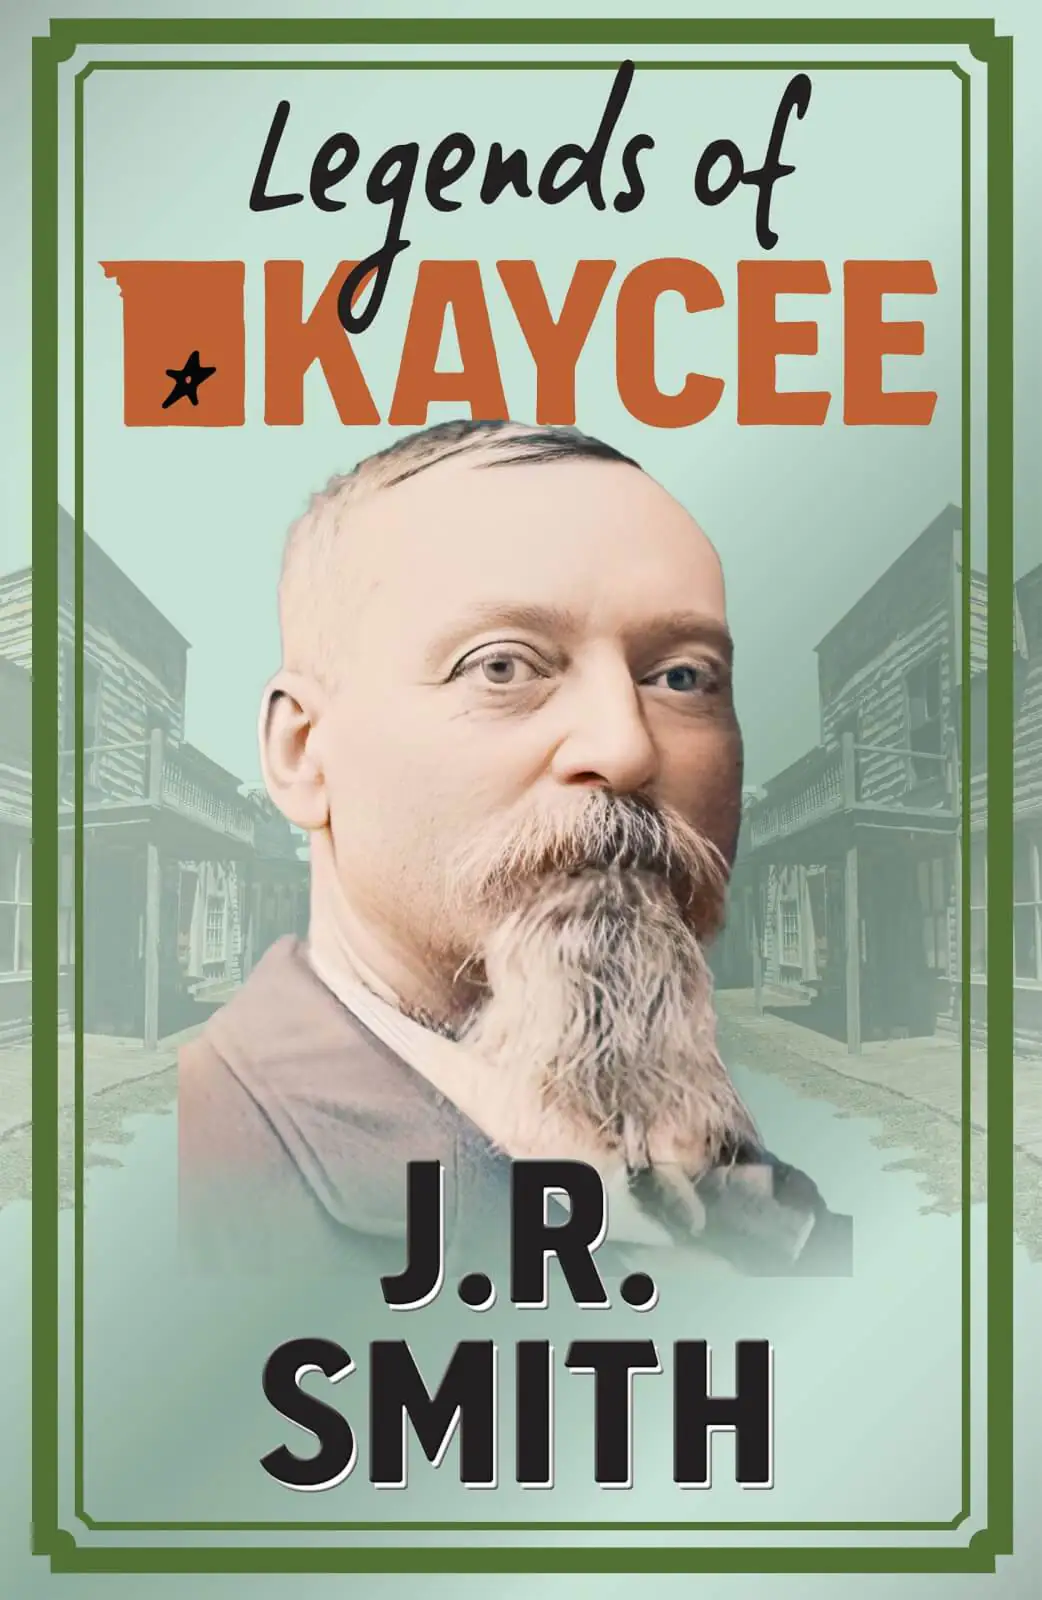 J.R. Smith in Kaycee, Wyoming